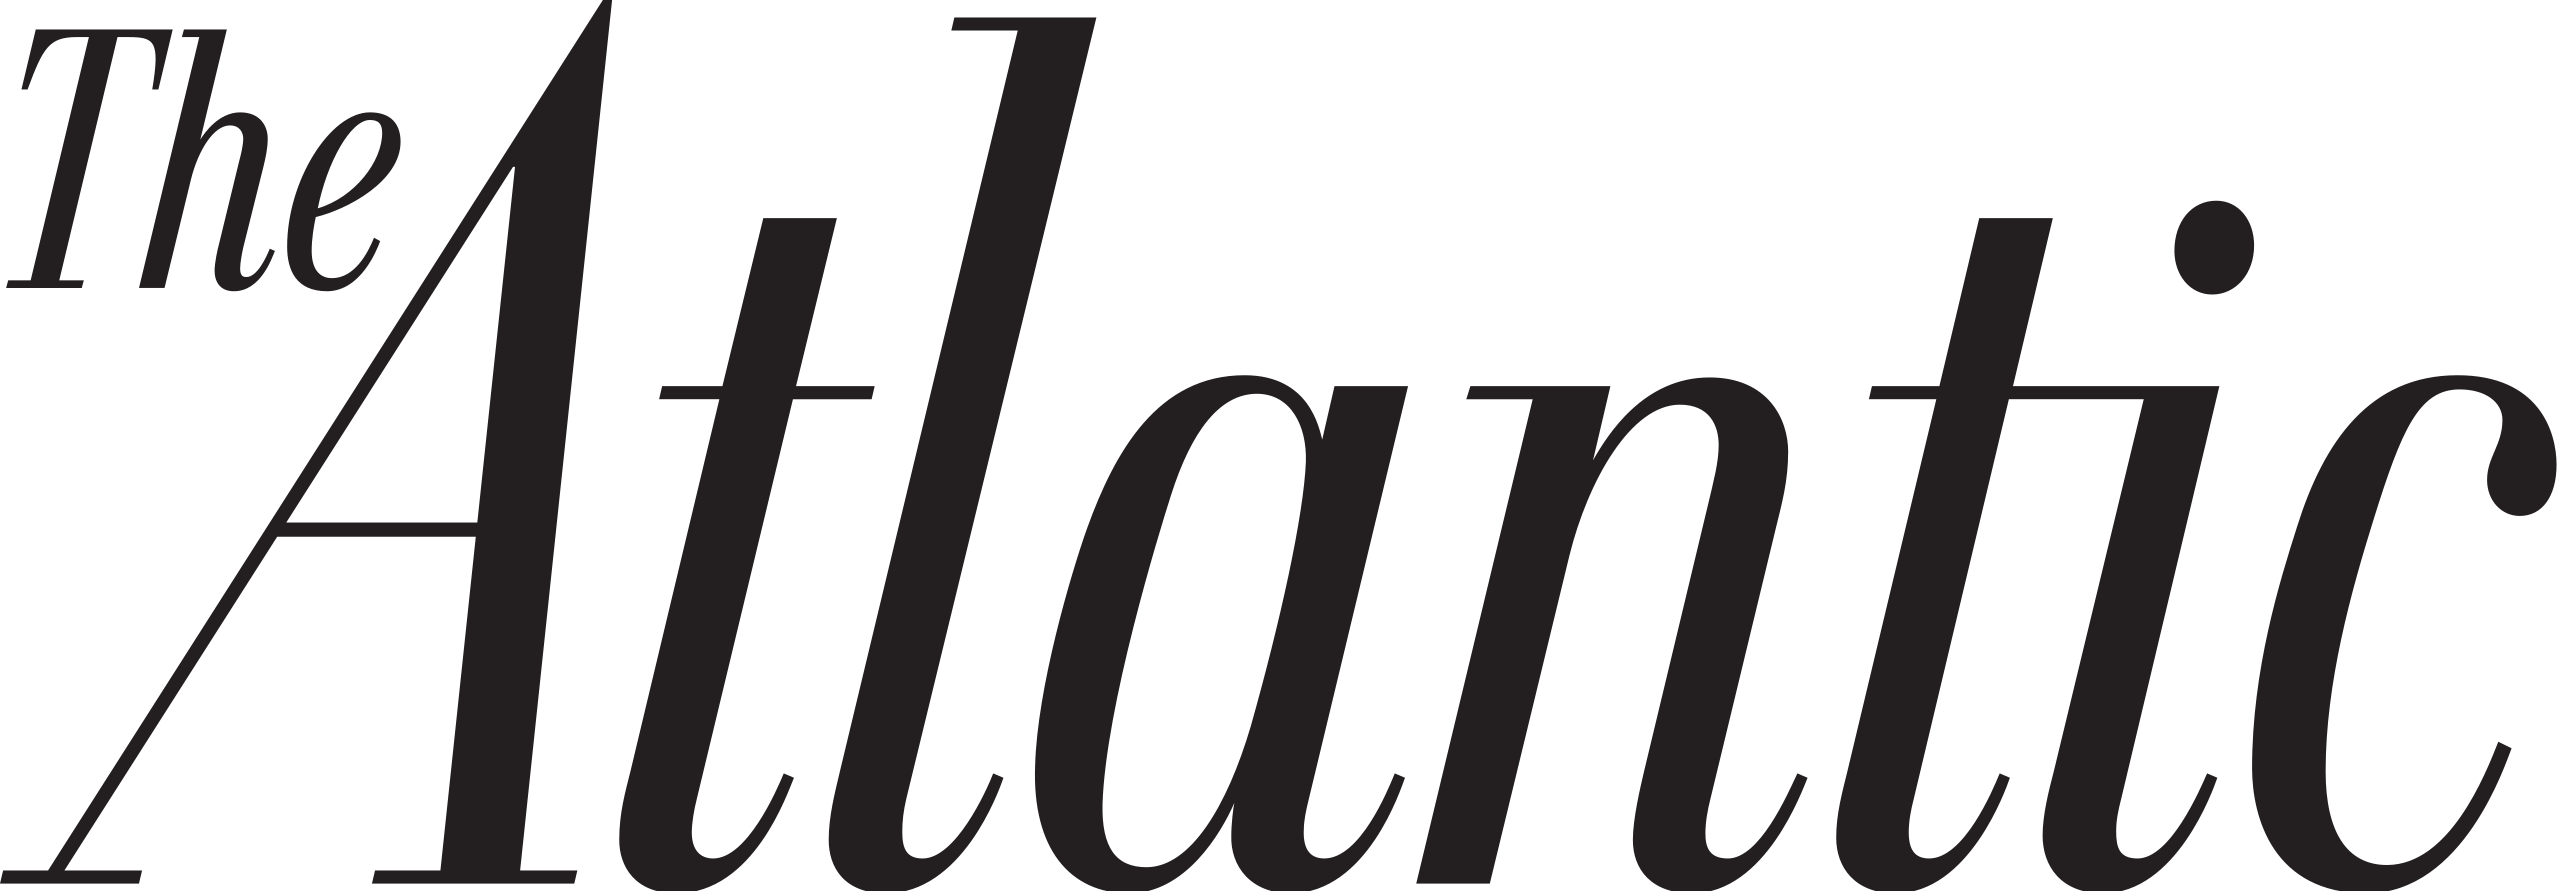 File:The Atlantic magazine logo.svg - Wikimedia Commons